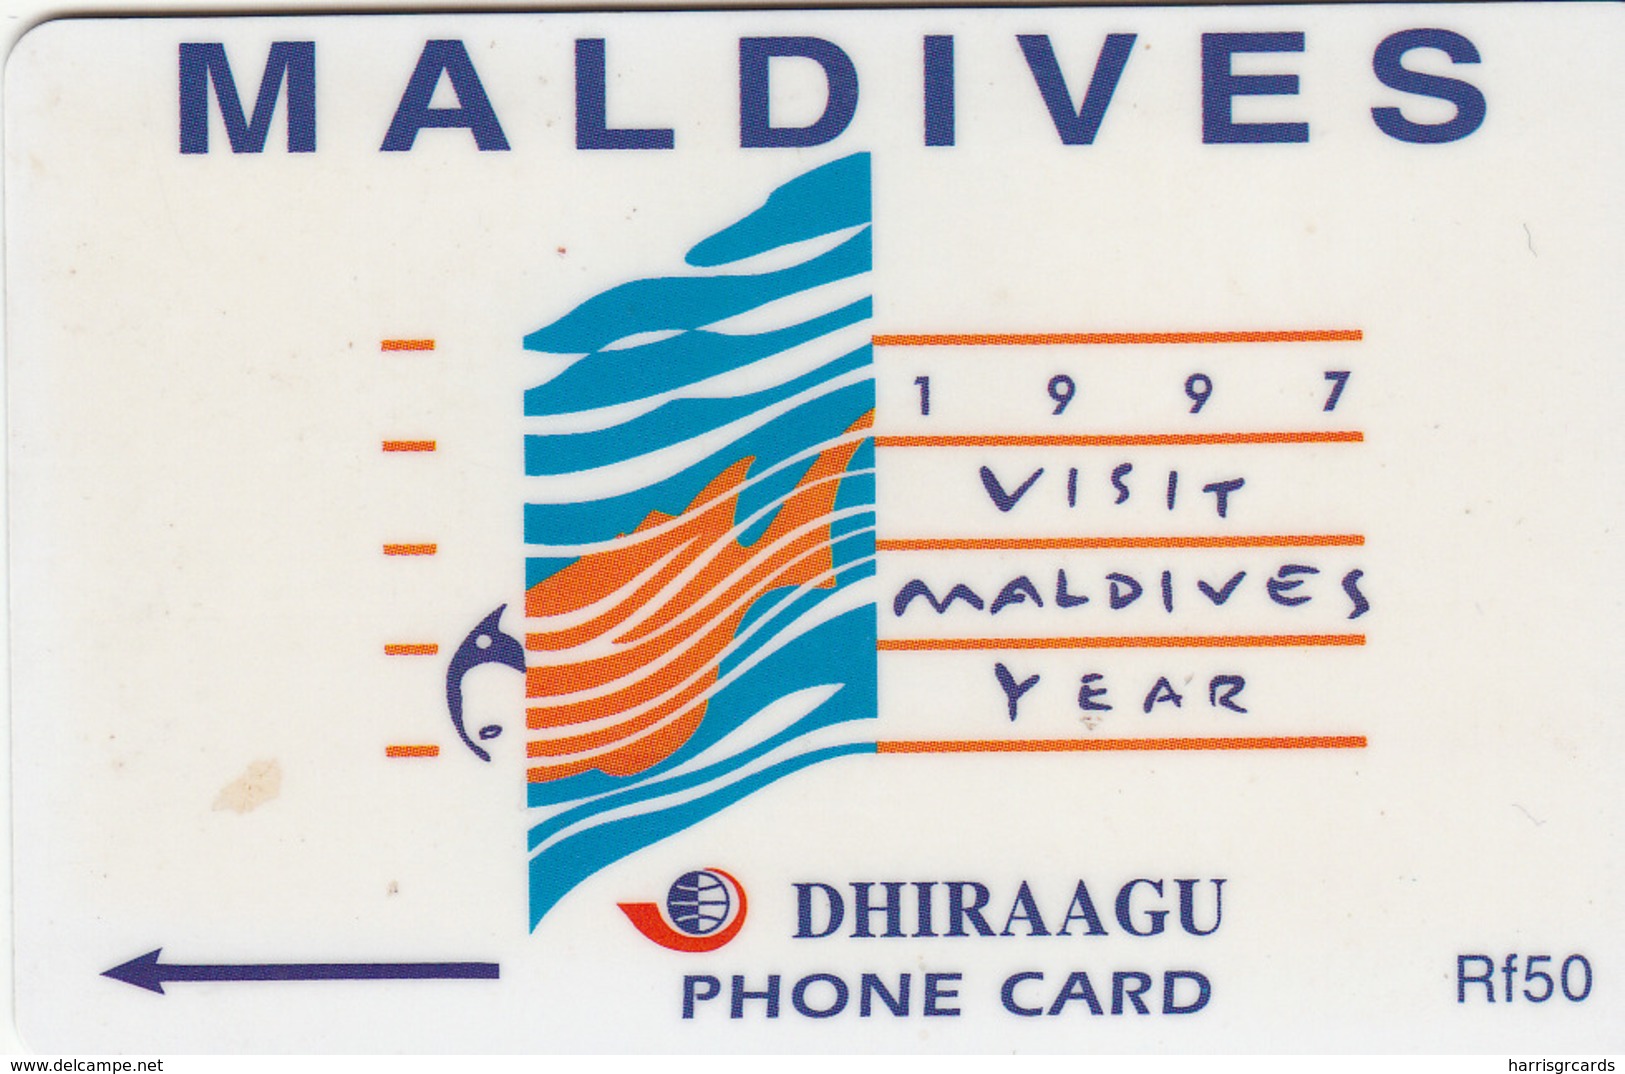 MALDIVES - Visit Maldives 1997,CN:164MLDD, Used - Maldive